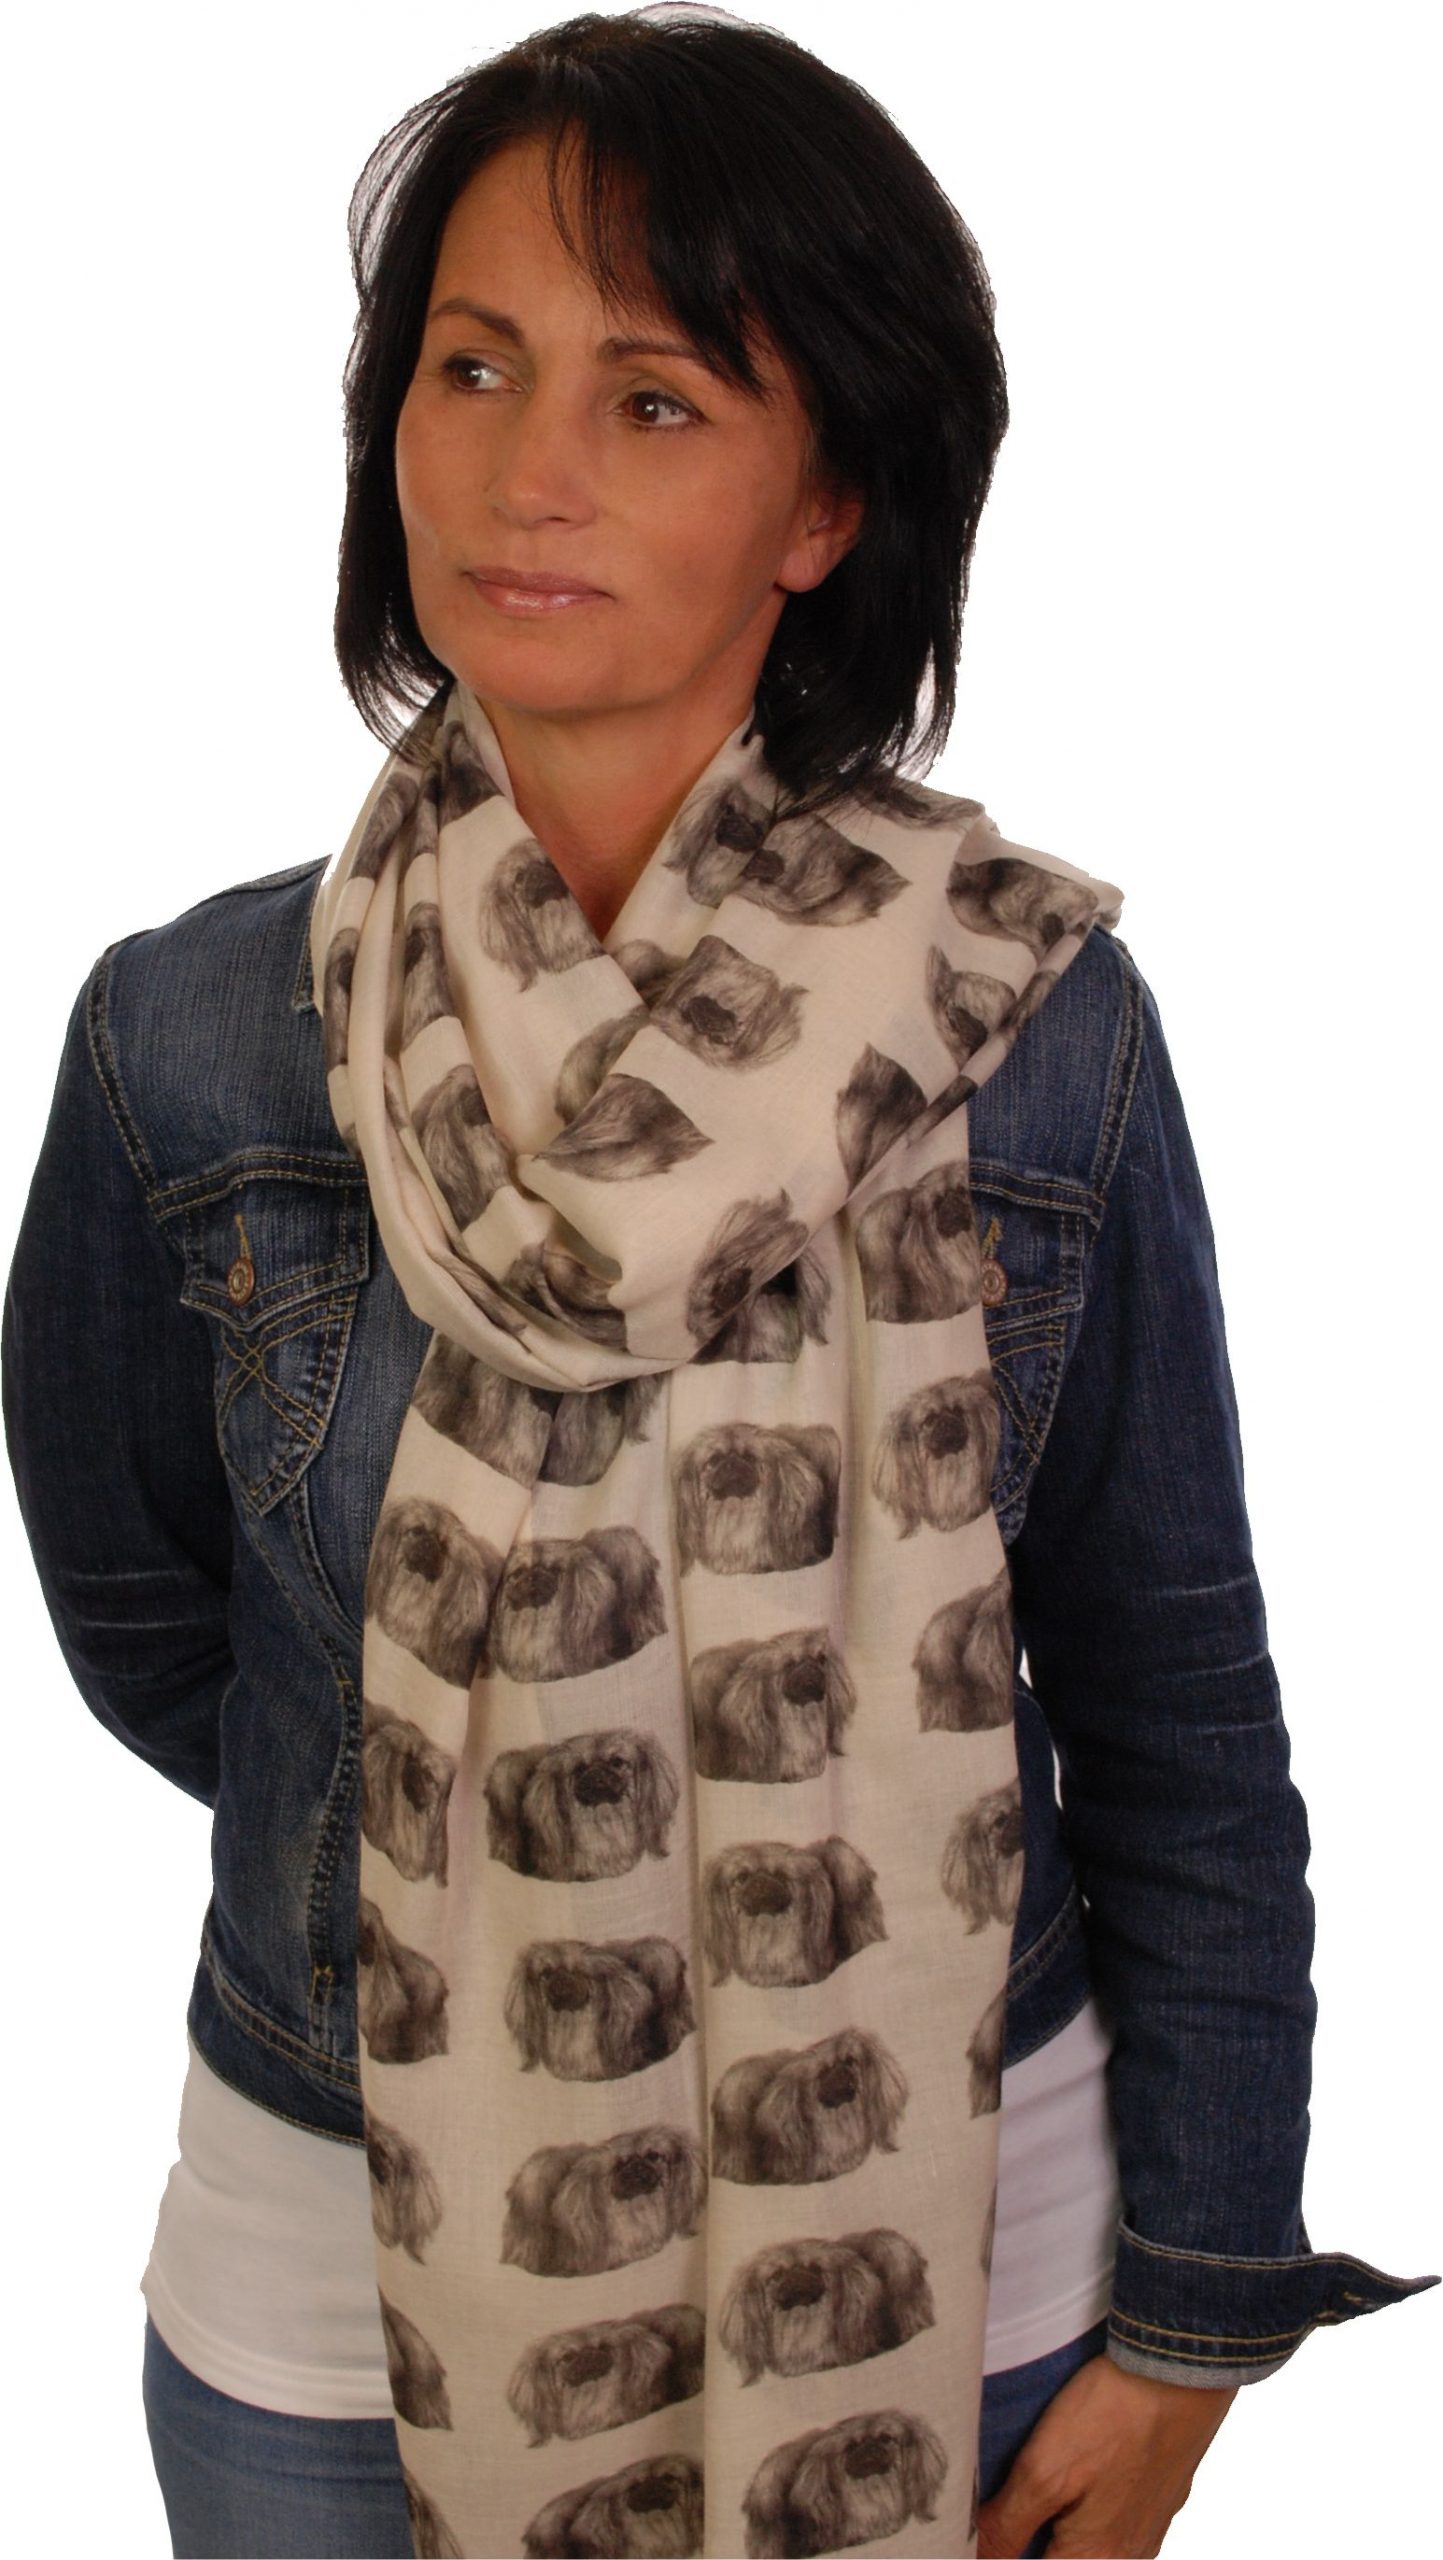 Mike Sibley Pekingese licensed design ladies fashion scarf